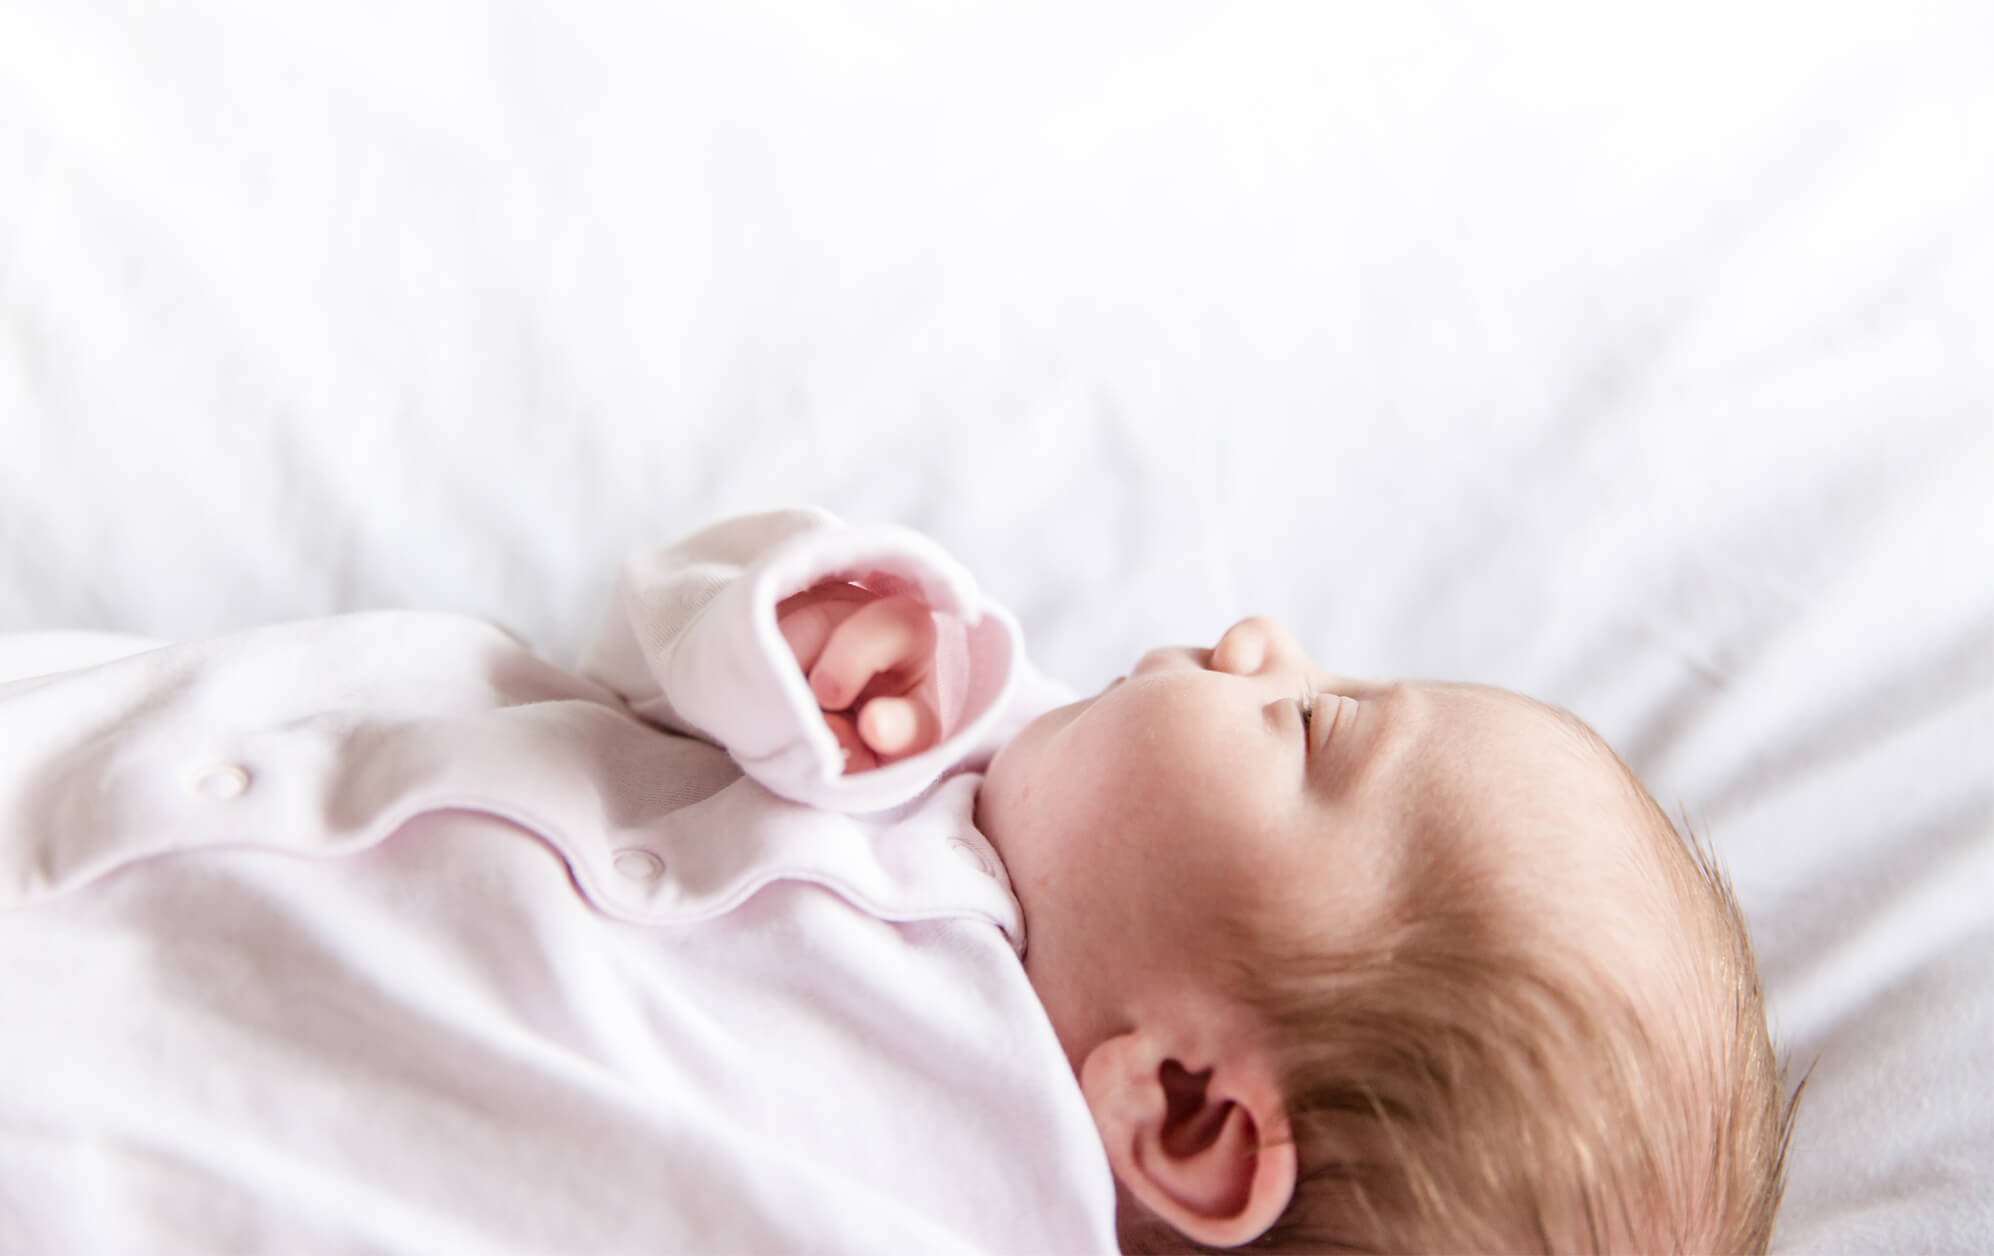 NEWBORN SLEEPING BABY CAPTURED BY NEWBORN CHELMSFORD PHOTOGRAPHER KIKA MITCHELL PHOTOGRAPHY